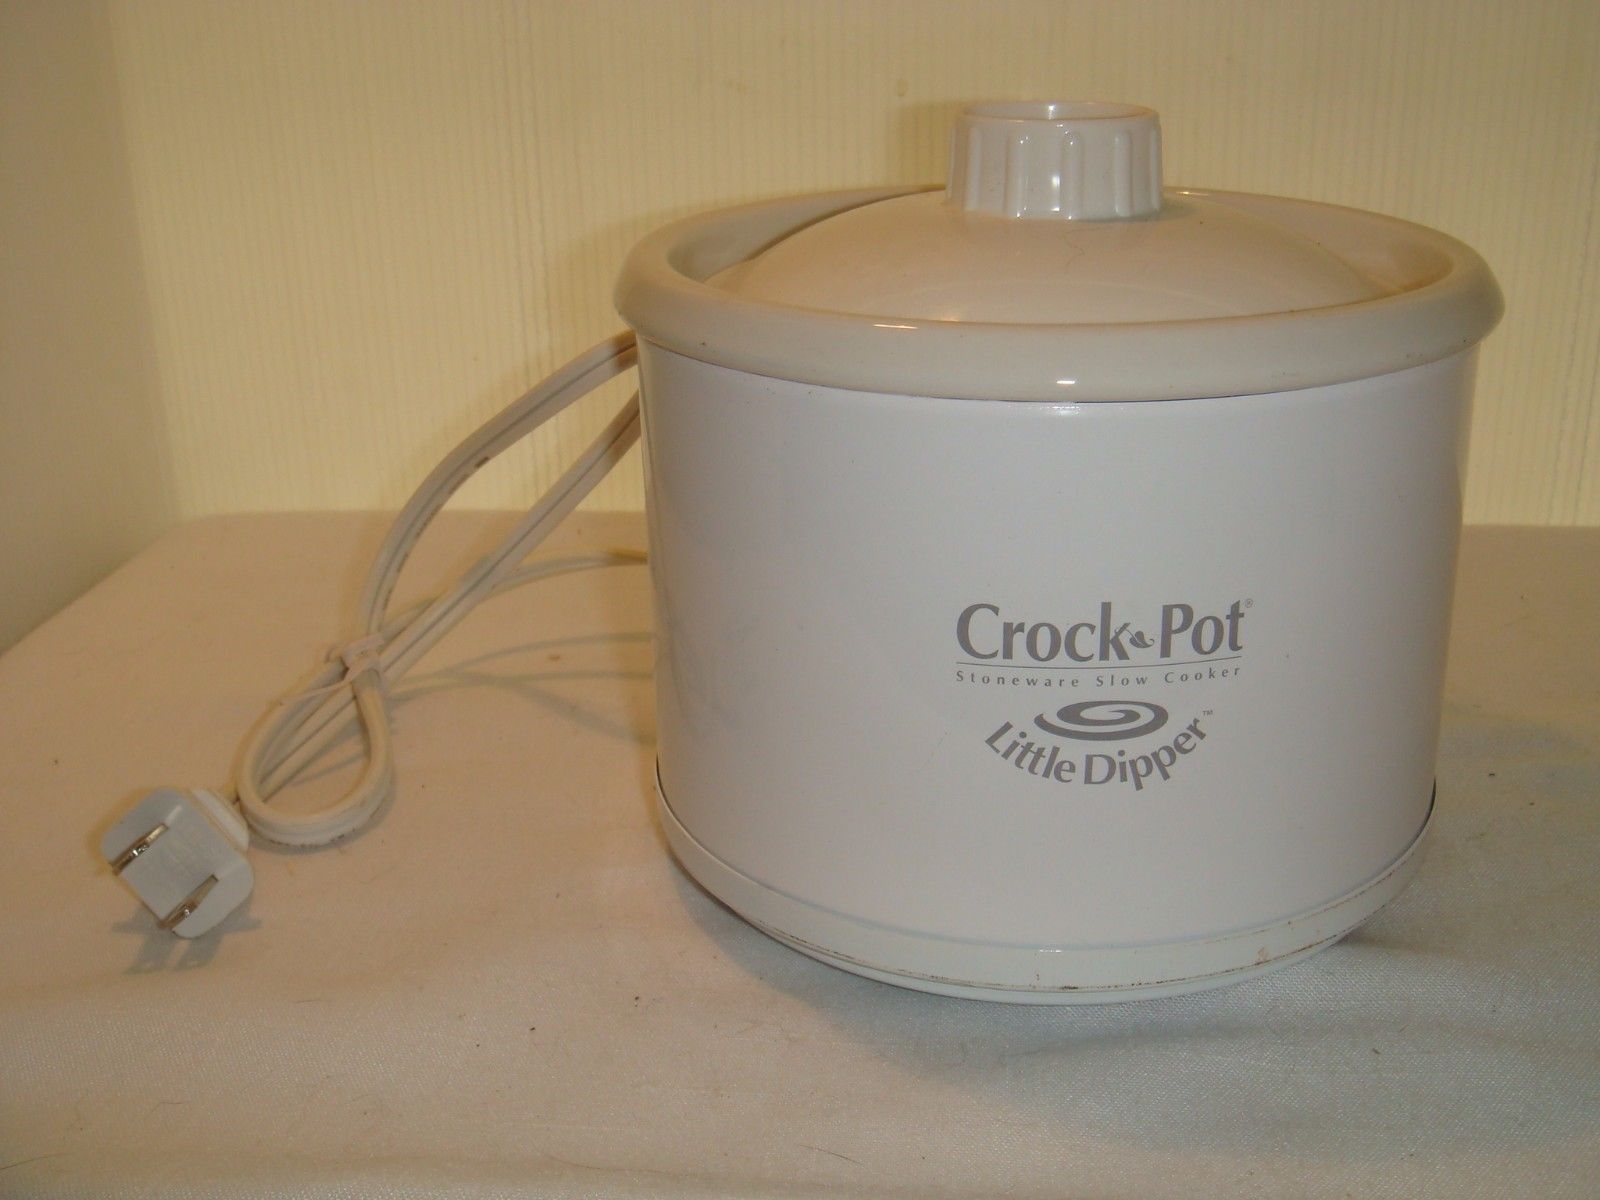 rival crock pot stoneware slow cooker manual